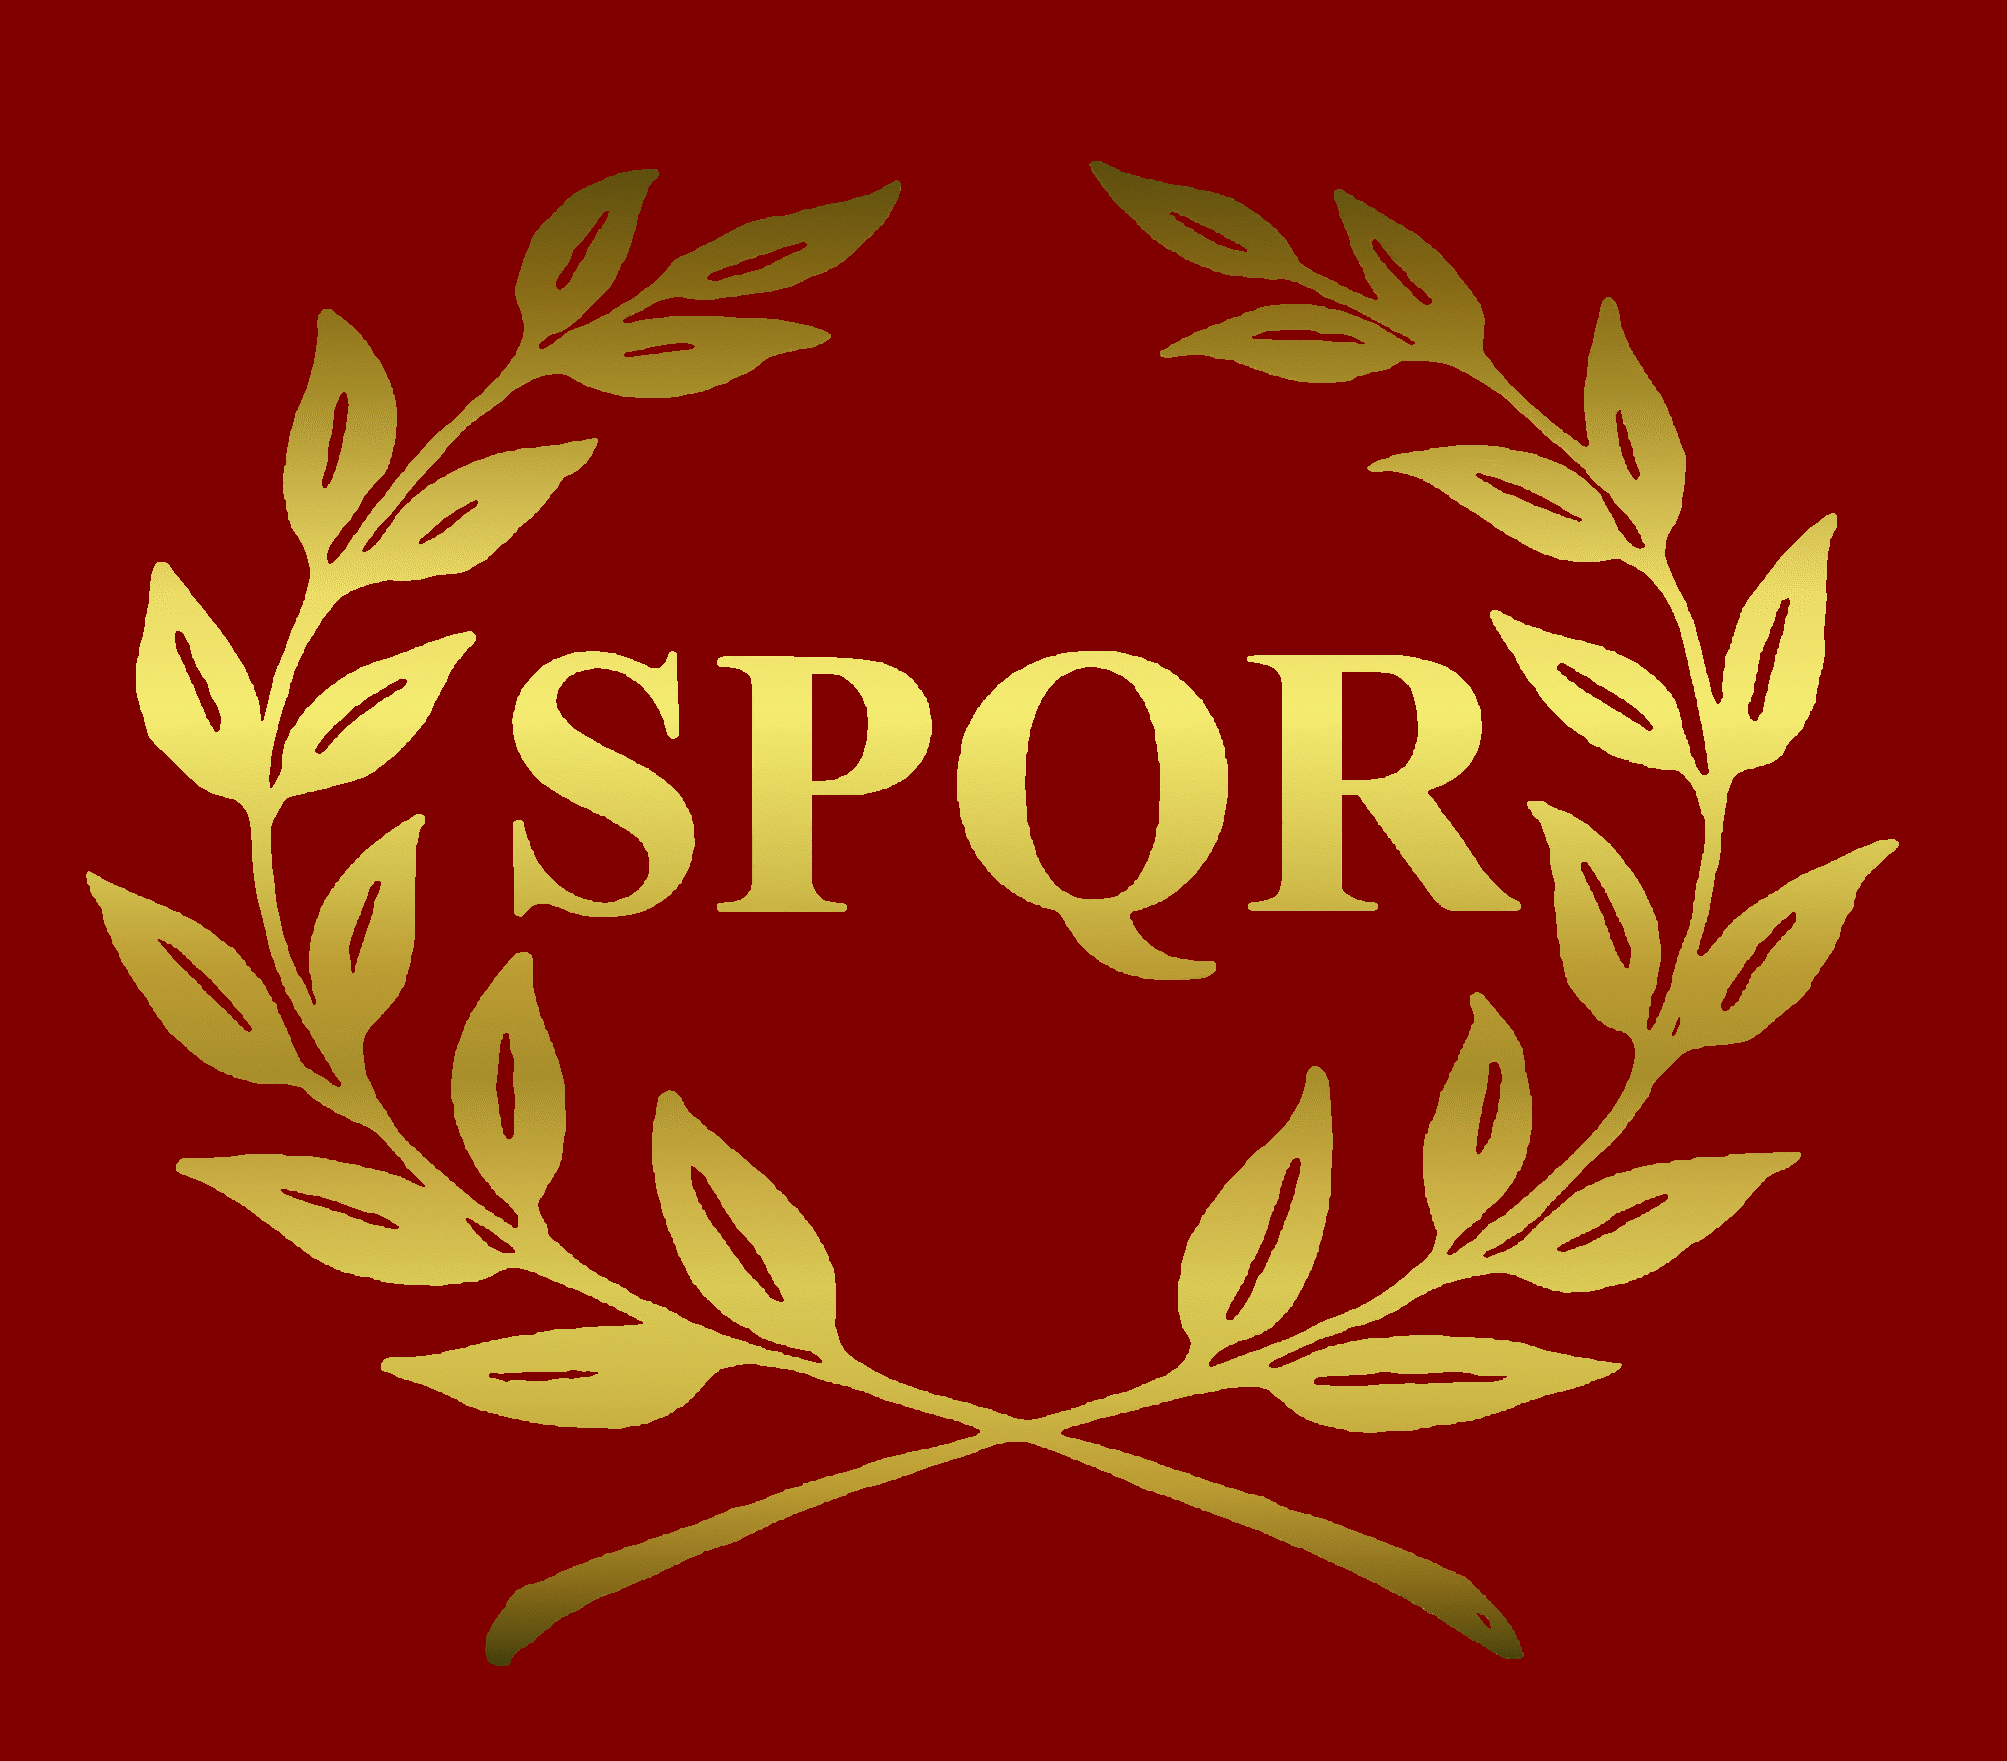 Roman Republic Symbol Image and Sign Ideas